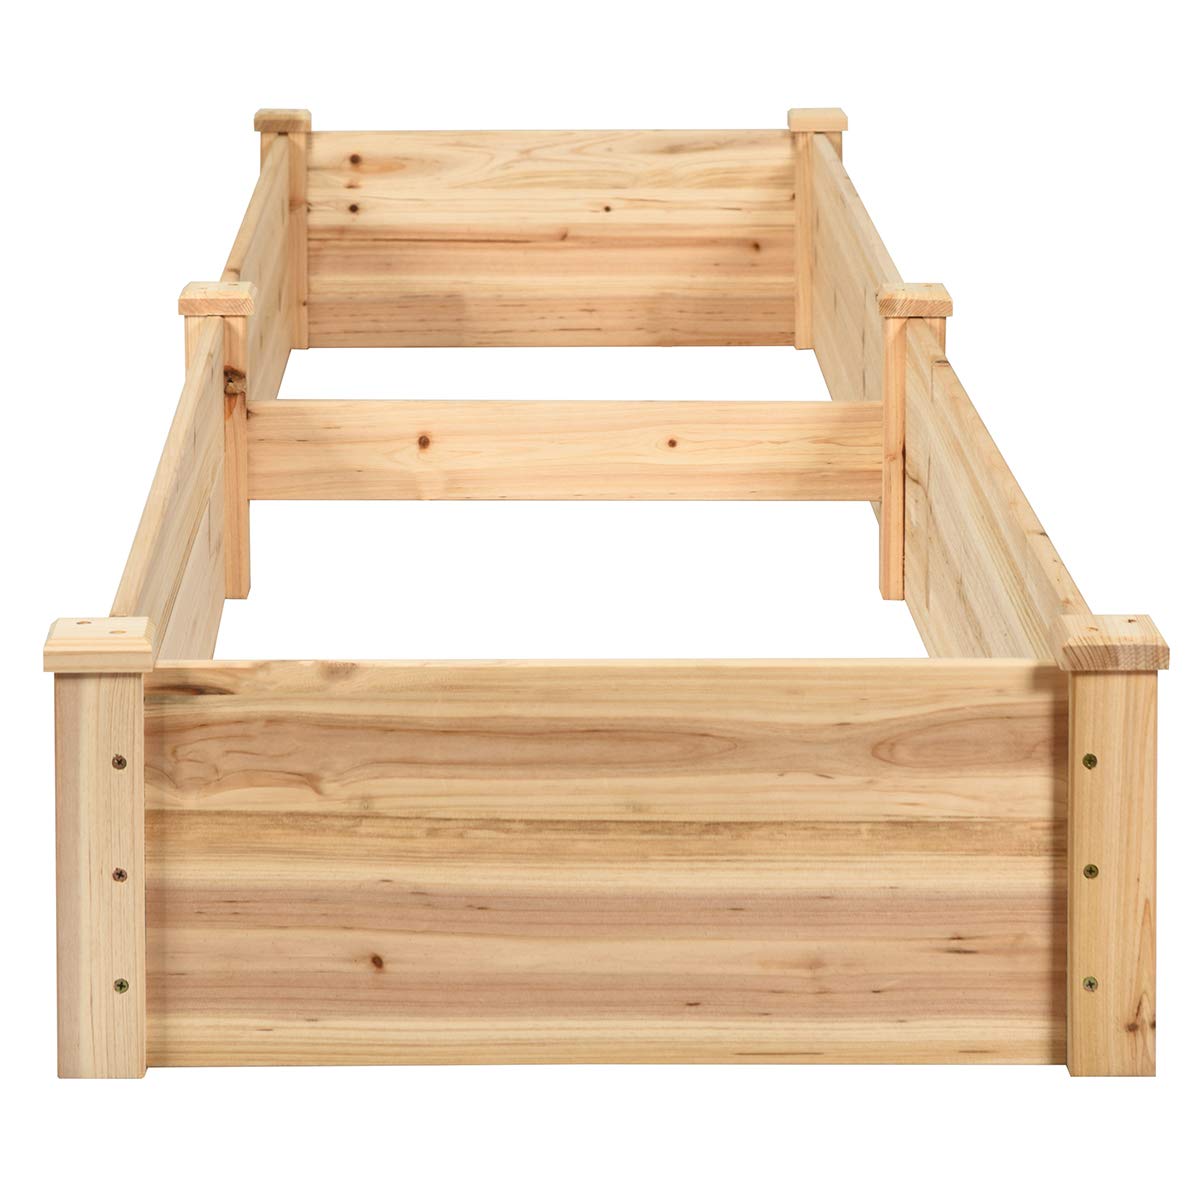 Raised Garden Bed Wood Planter Box, ( 97" x 25" x 10" )